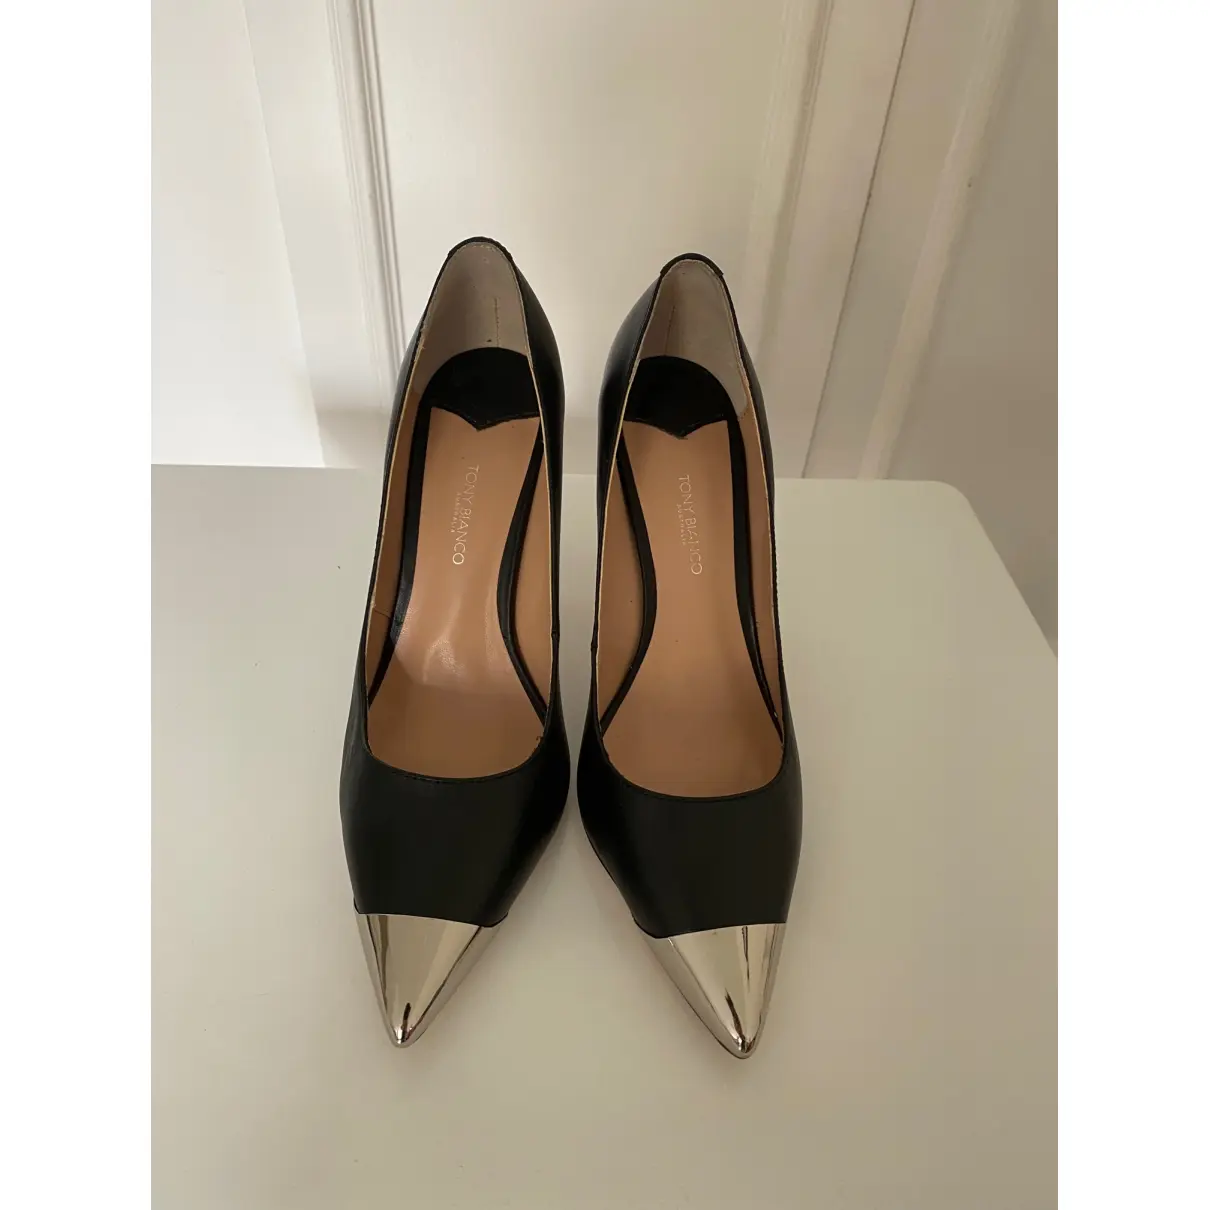 Buy Tony Bianco Leather heels online